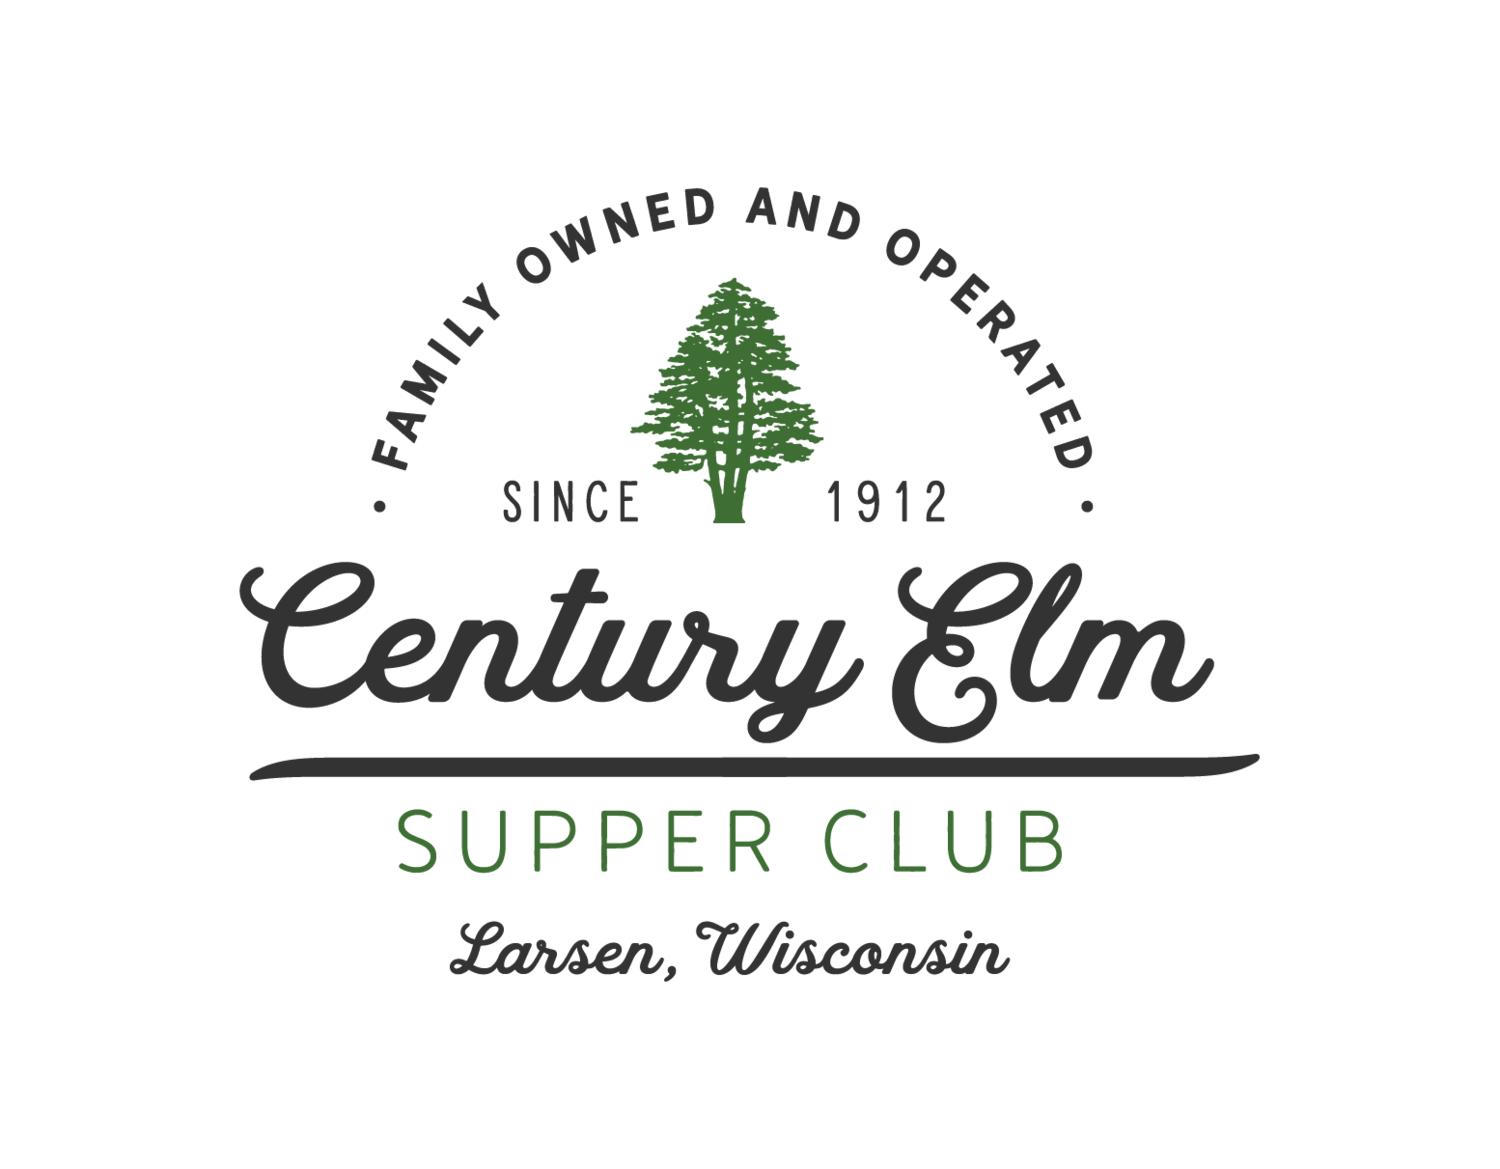 Century Elm Supper Club